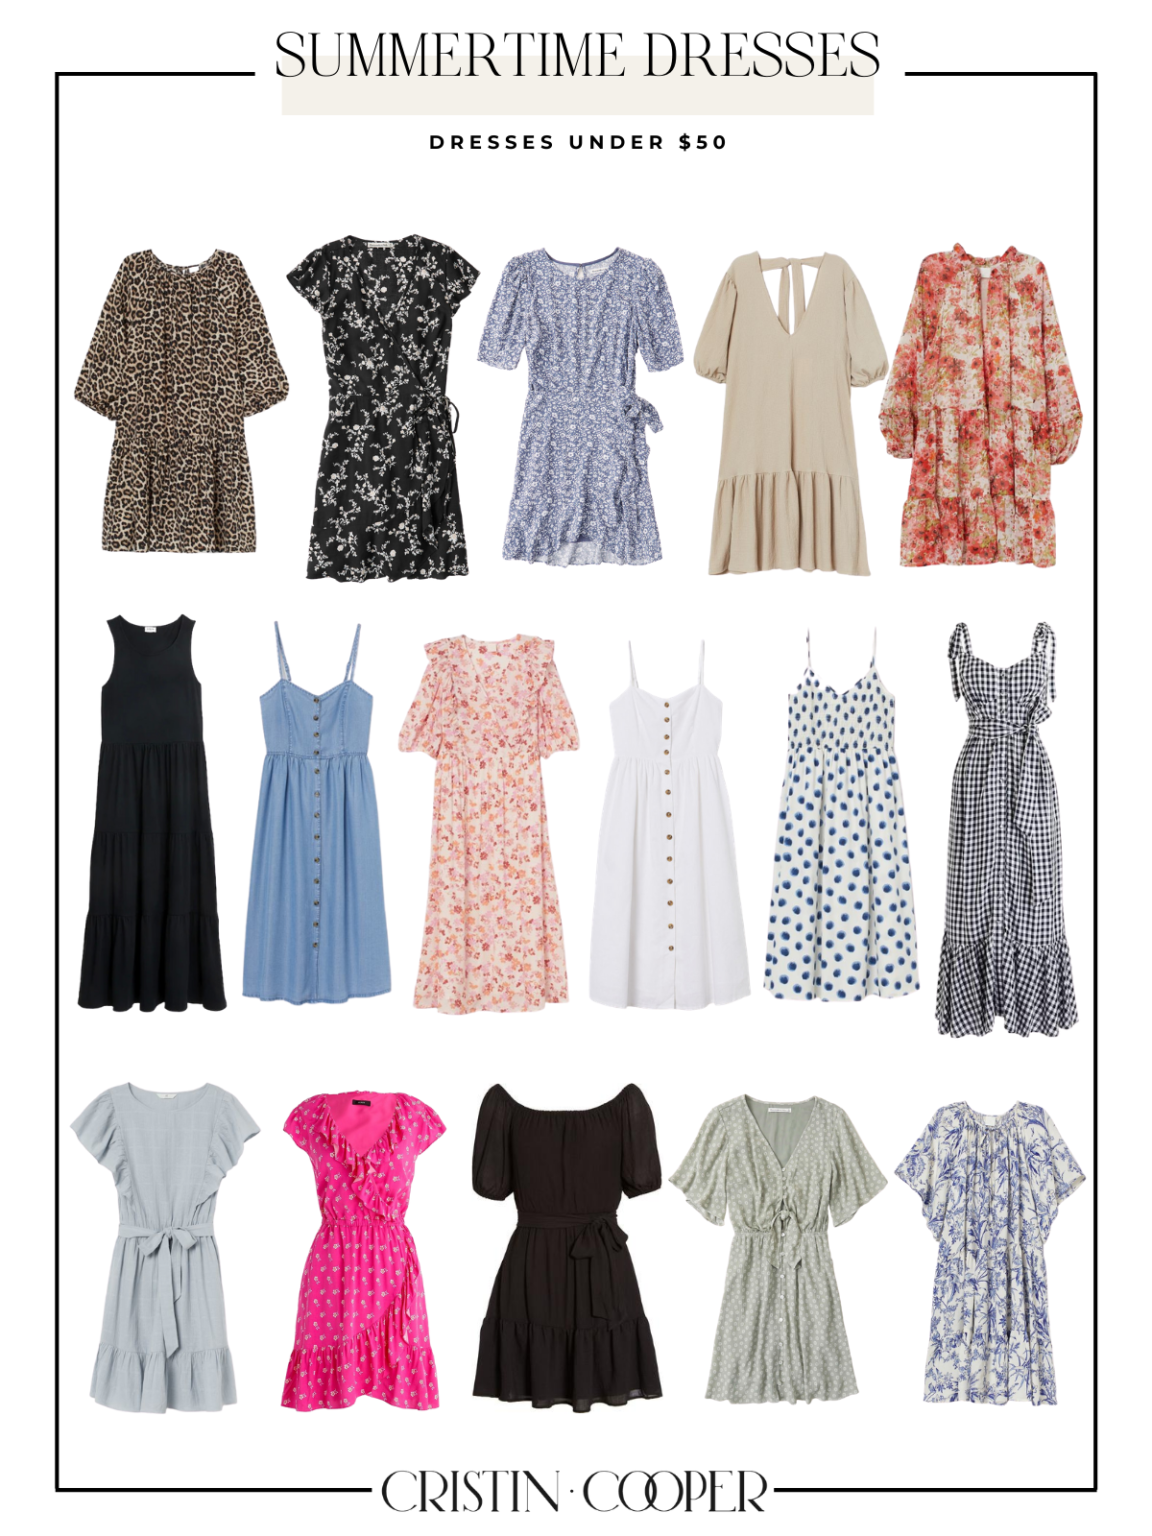 Summer Dresses Under $50 - Cristin Cooper